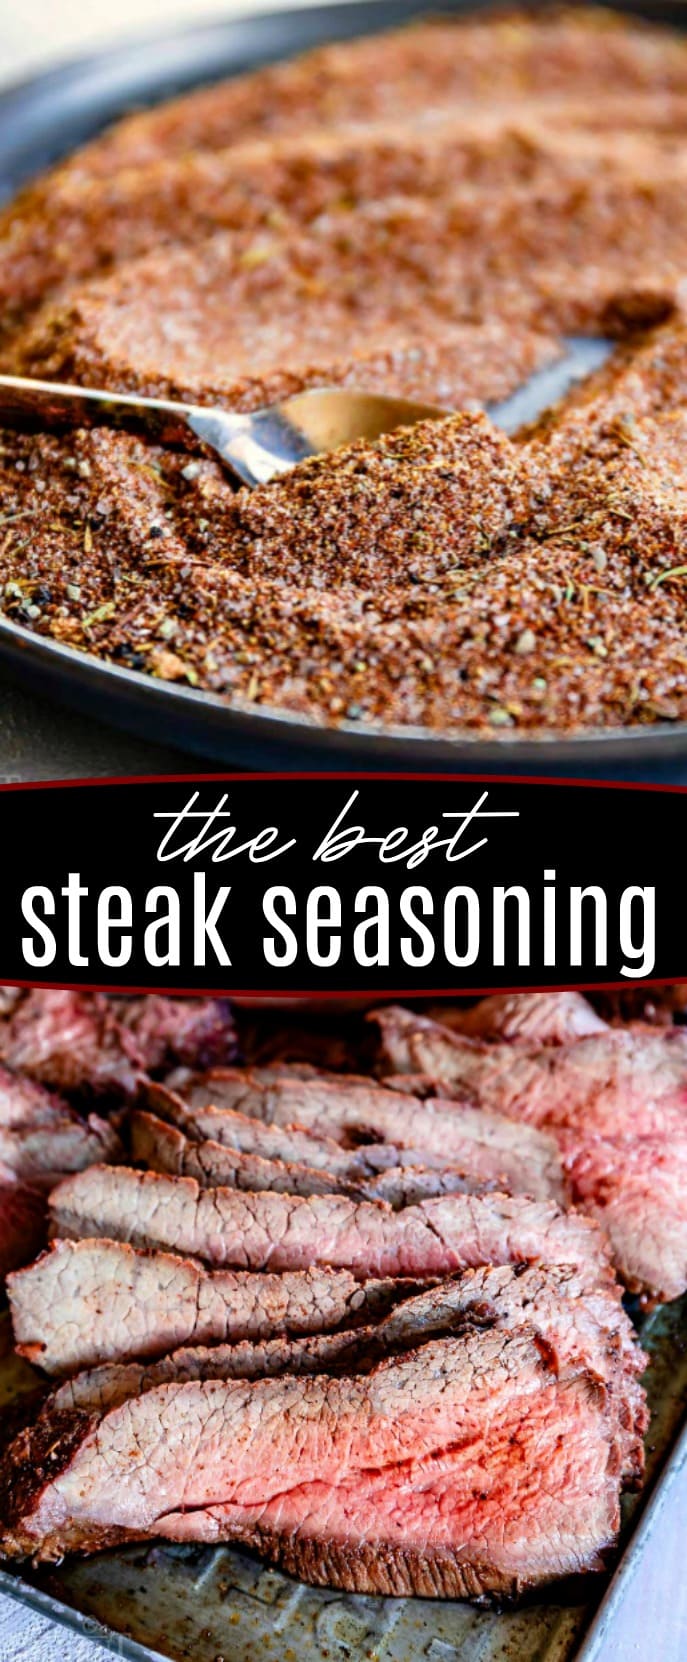 https://www.momontimeout.com/wp-content/uploads/2019/07/best-steak-seasoning-collage.jpg